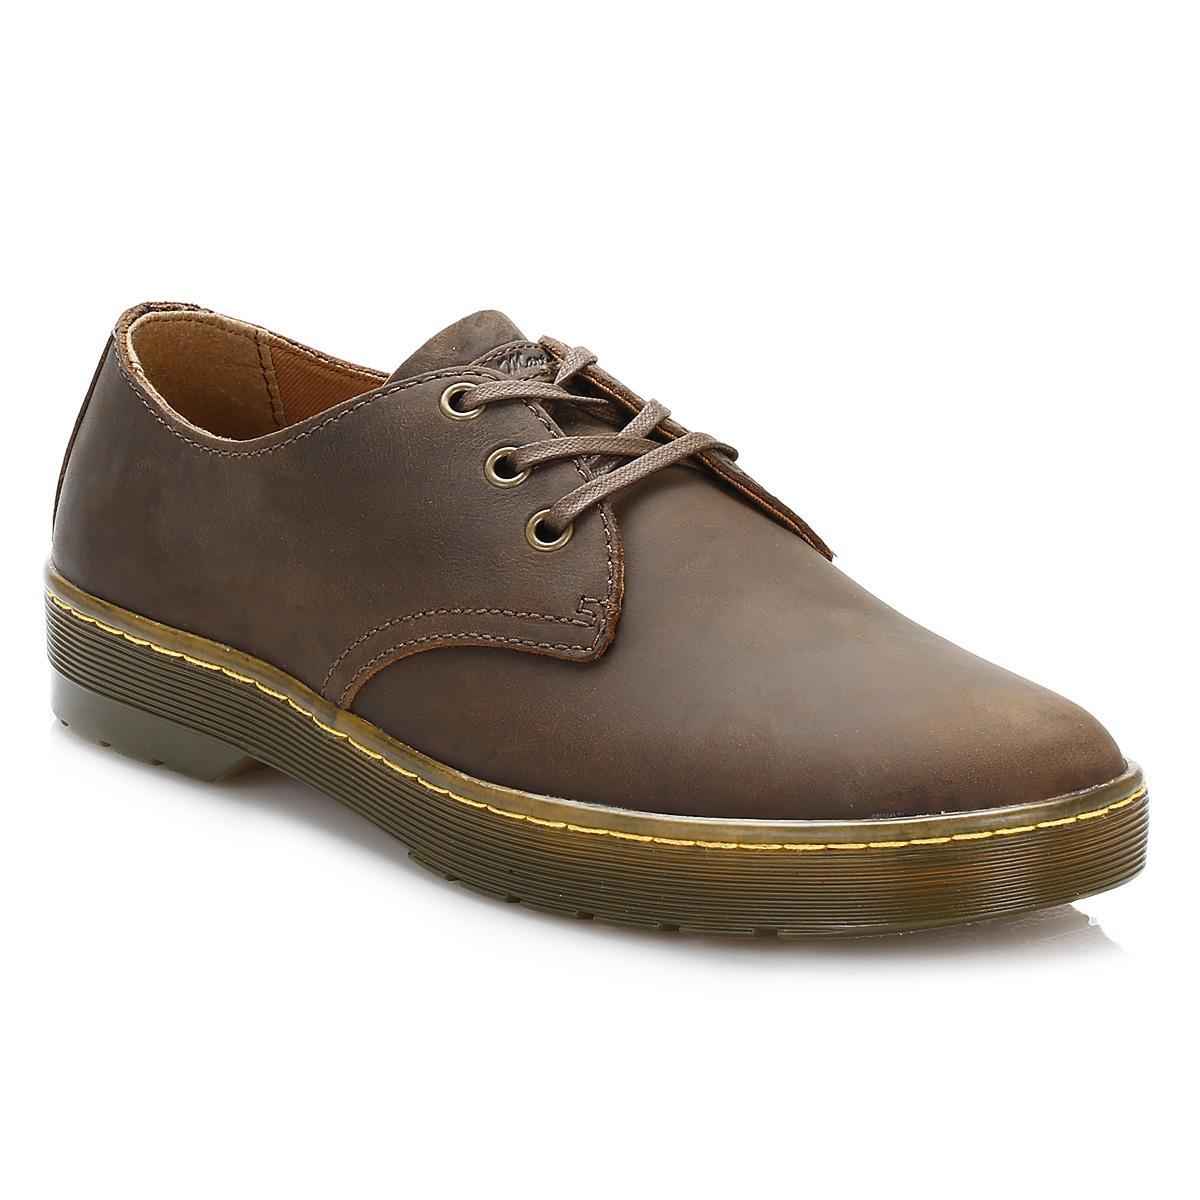 Lyst - Dr. Martens Dr. Martens Mens Gaucho Coronado Derby Shoes in ...